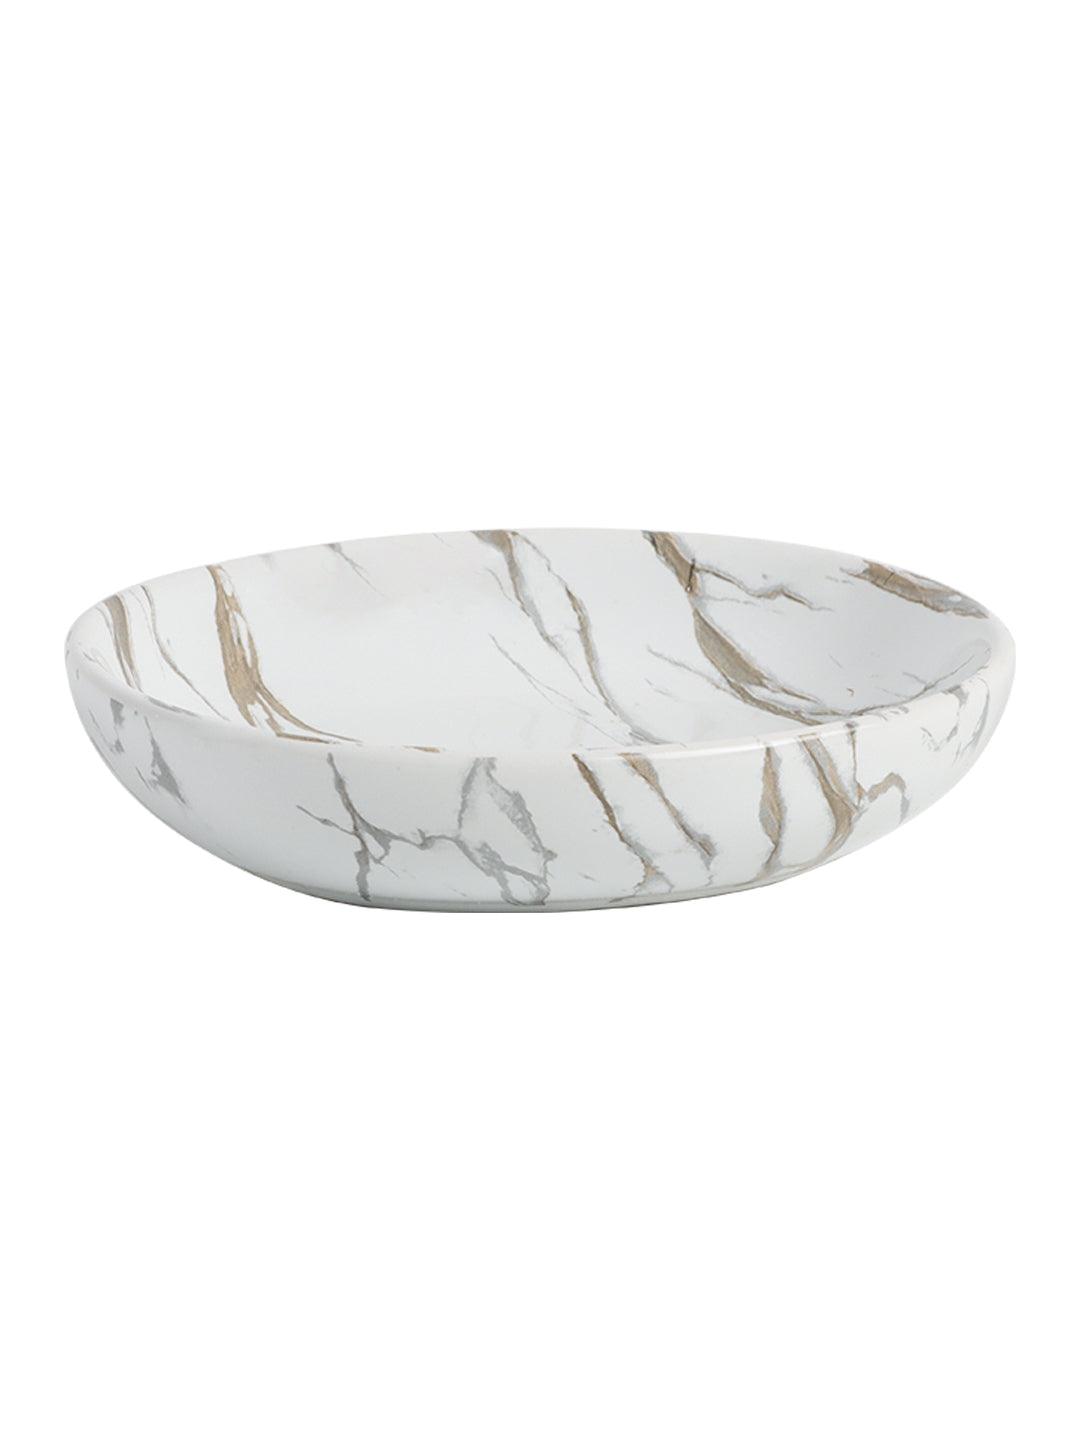 White Ceramic Bathroom Set Of 4 - Stone Finish, Bath Accessories